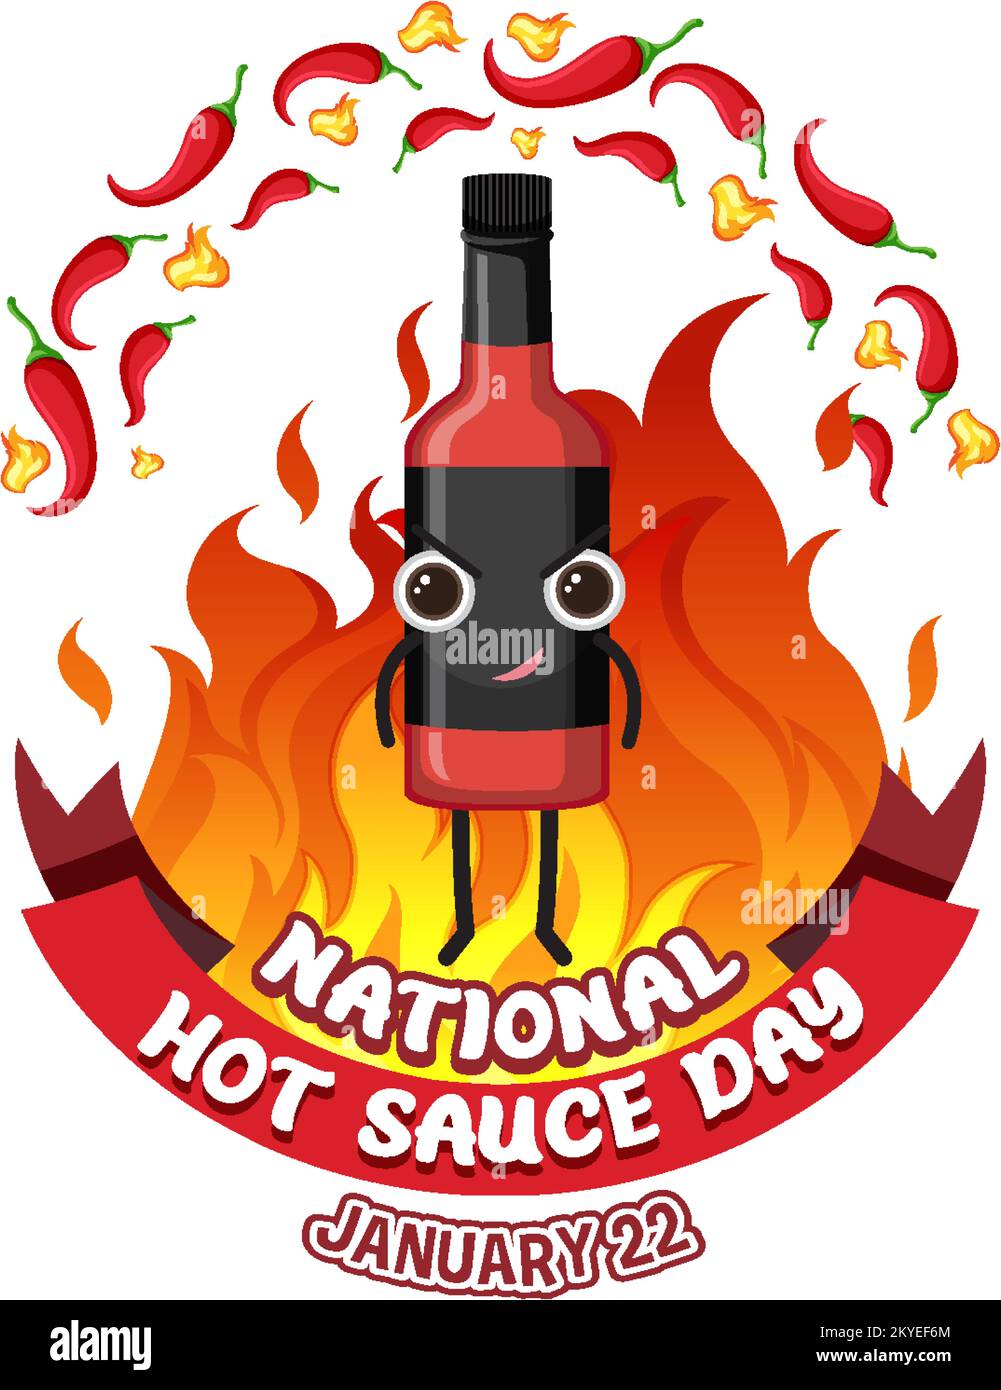 National Hot Sauce Day Banner Design illustration Stock Vector